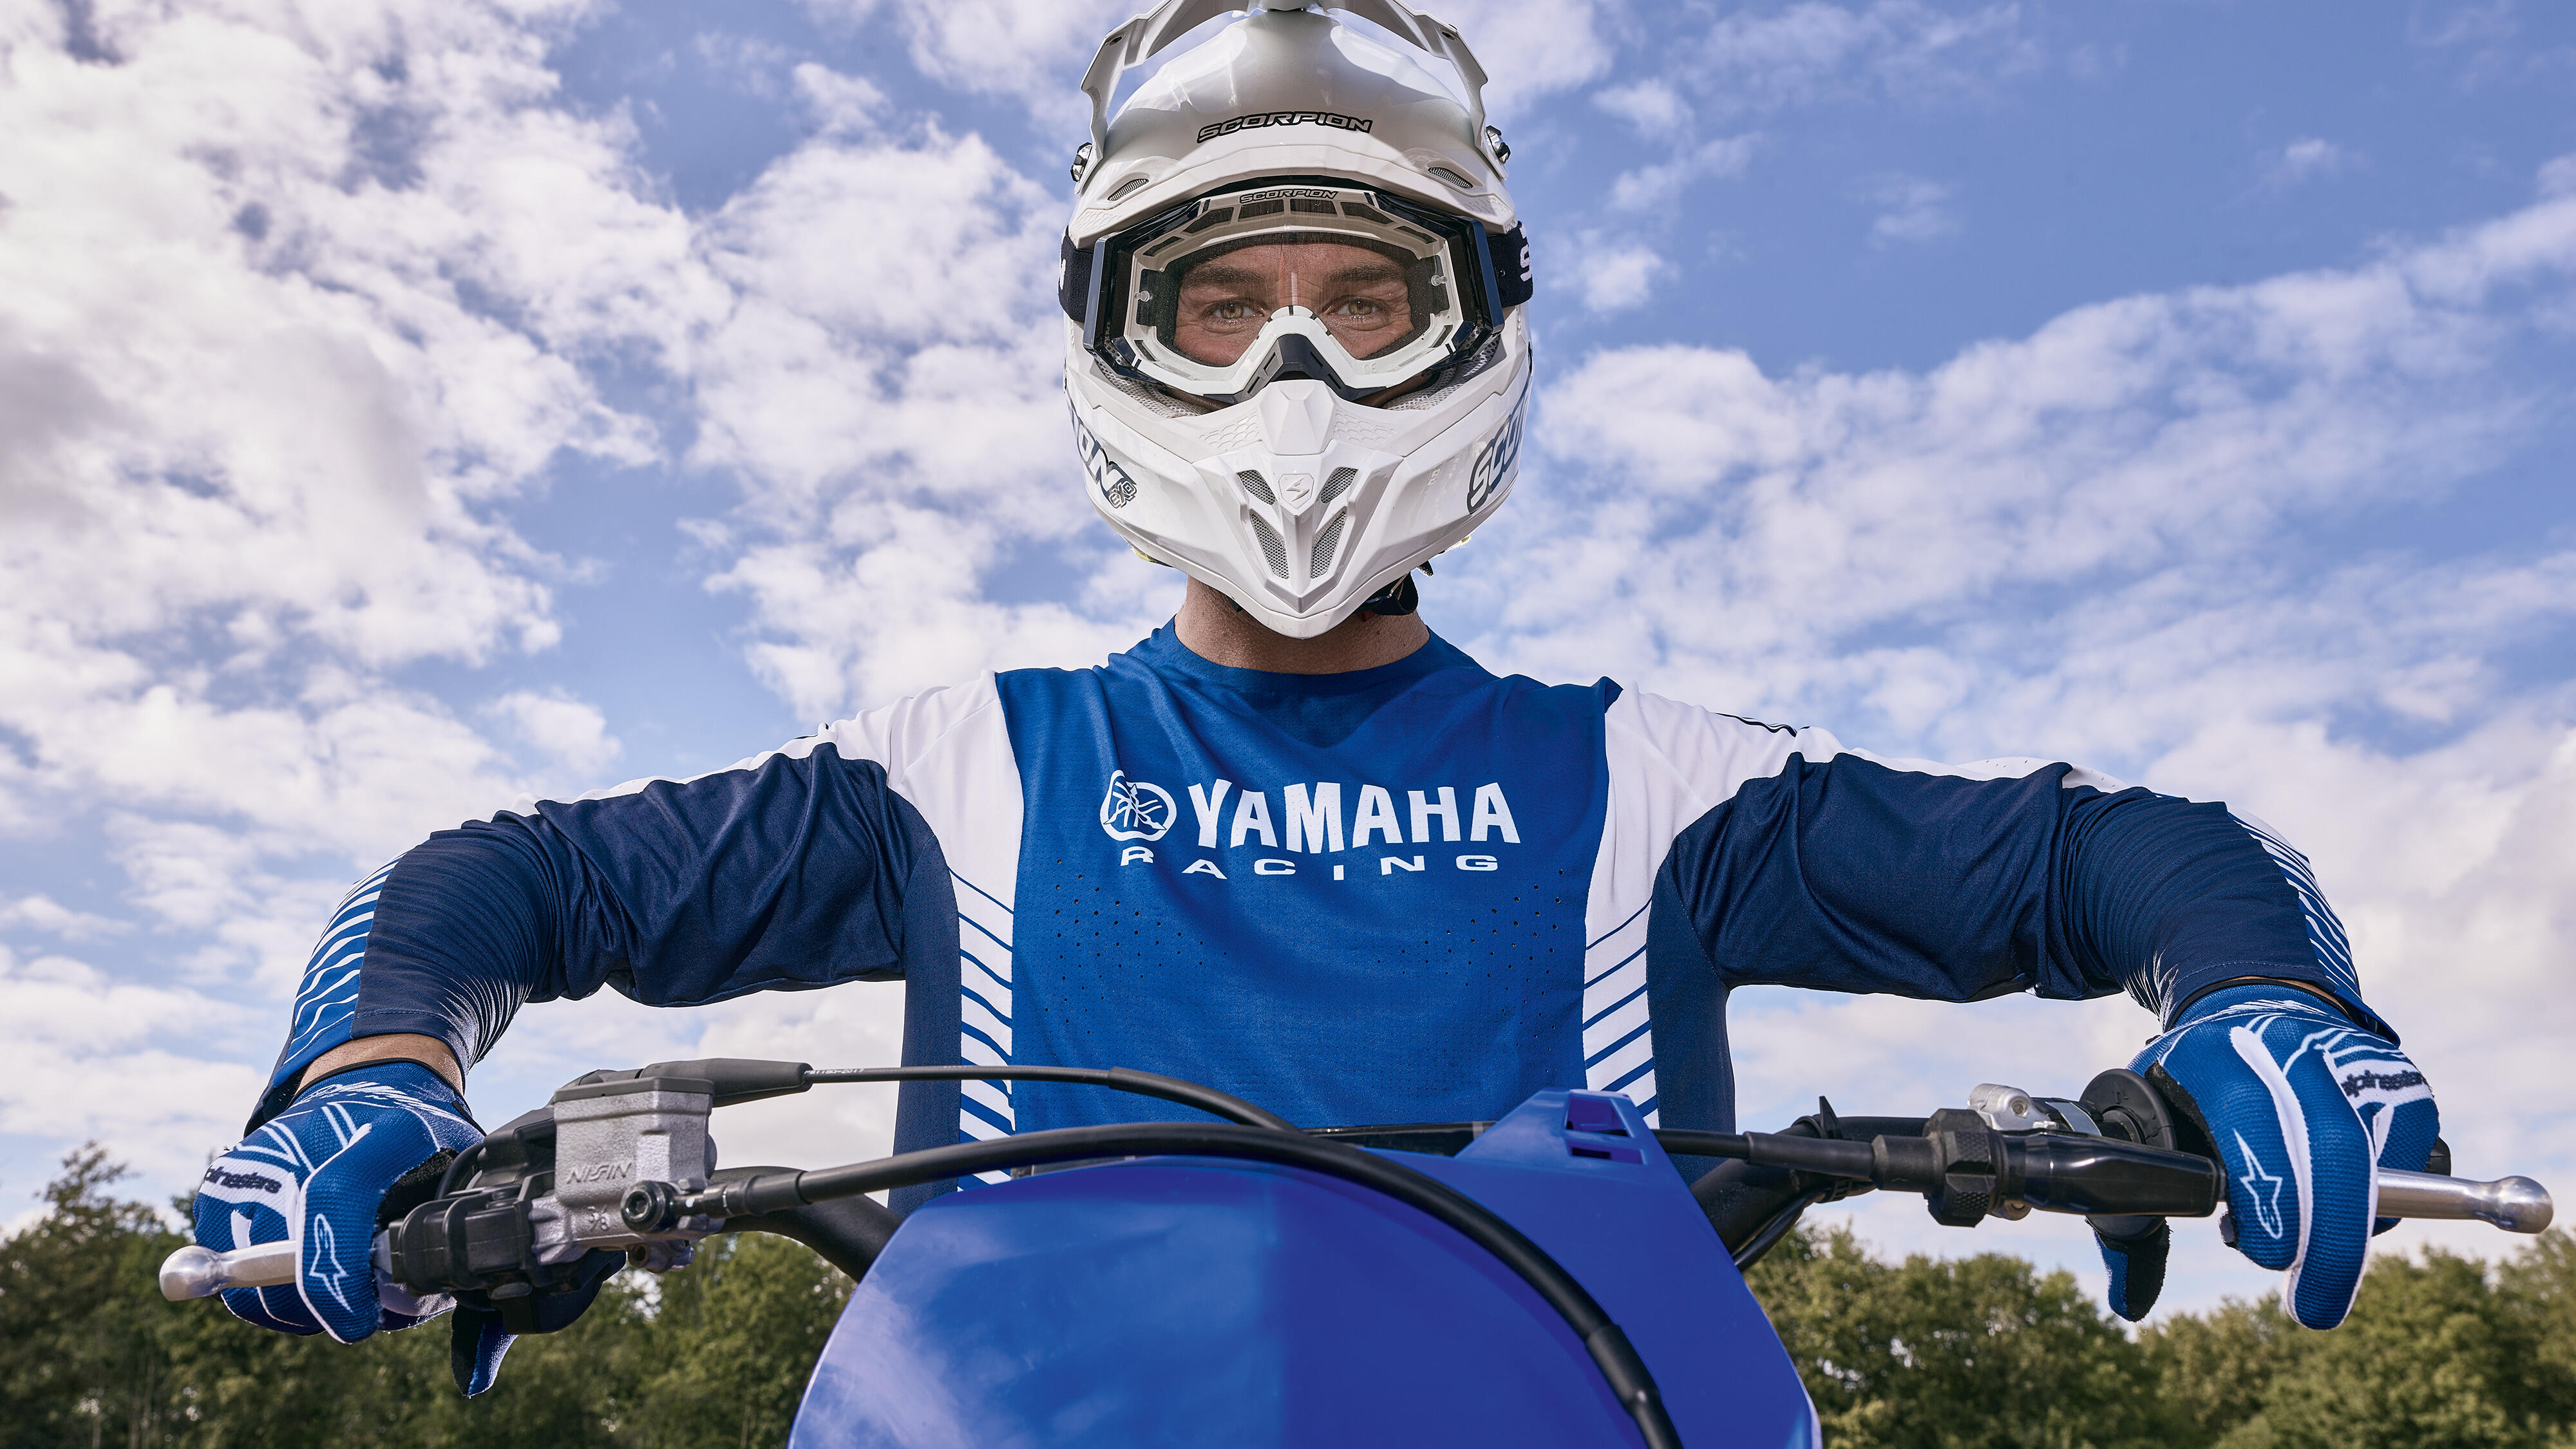 https://www.yamaha-motor.eu/content/dam/yme/language-masters/en/clothing-merchandise-header-images/riding-gear.jpg